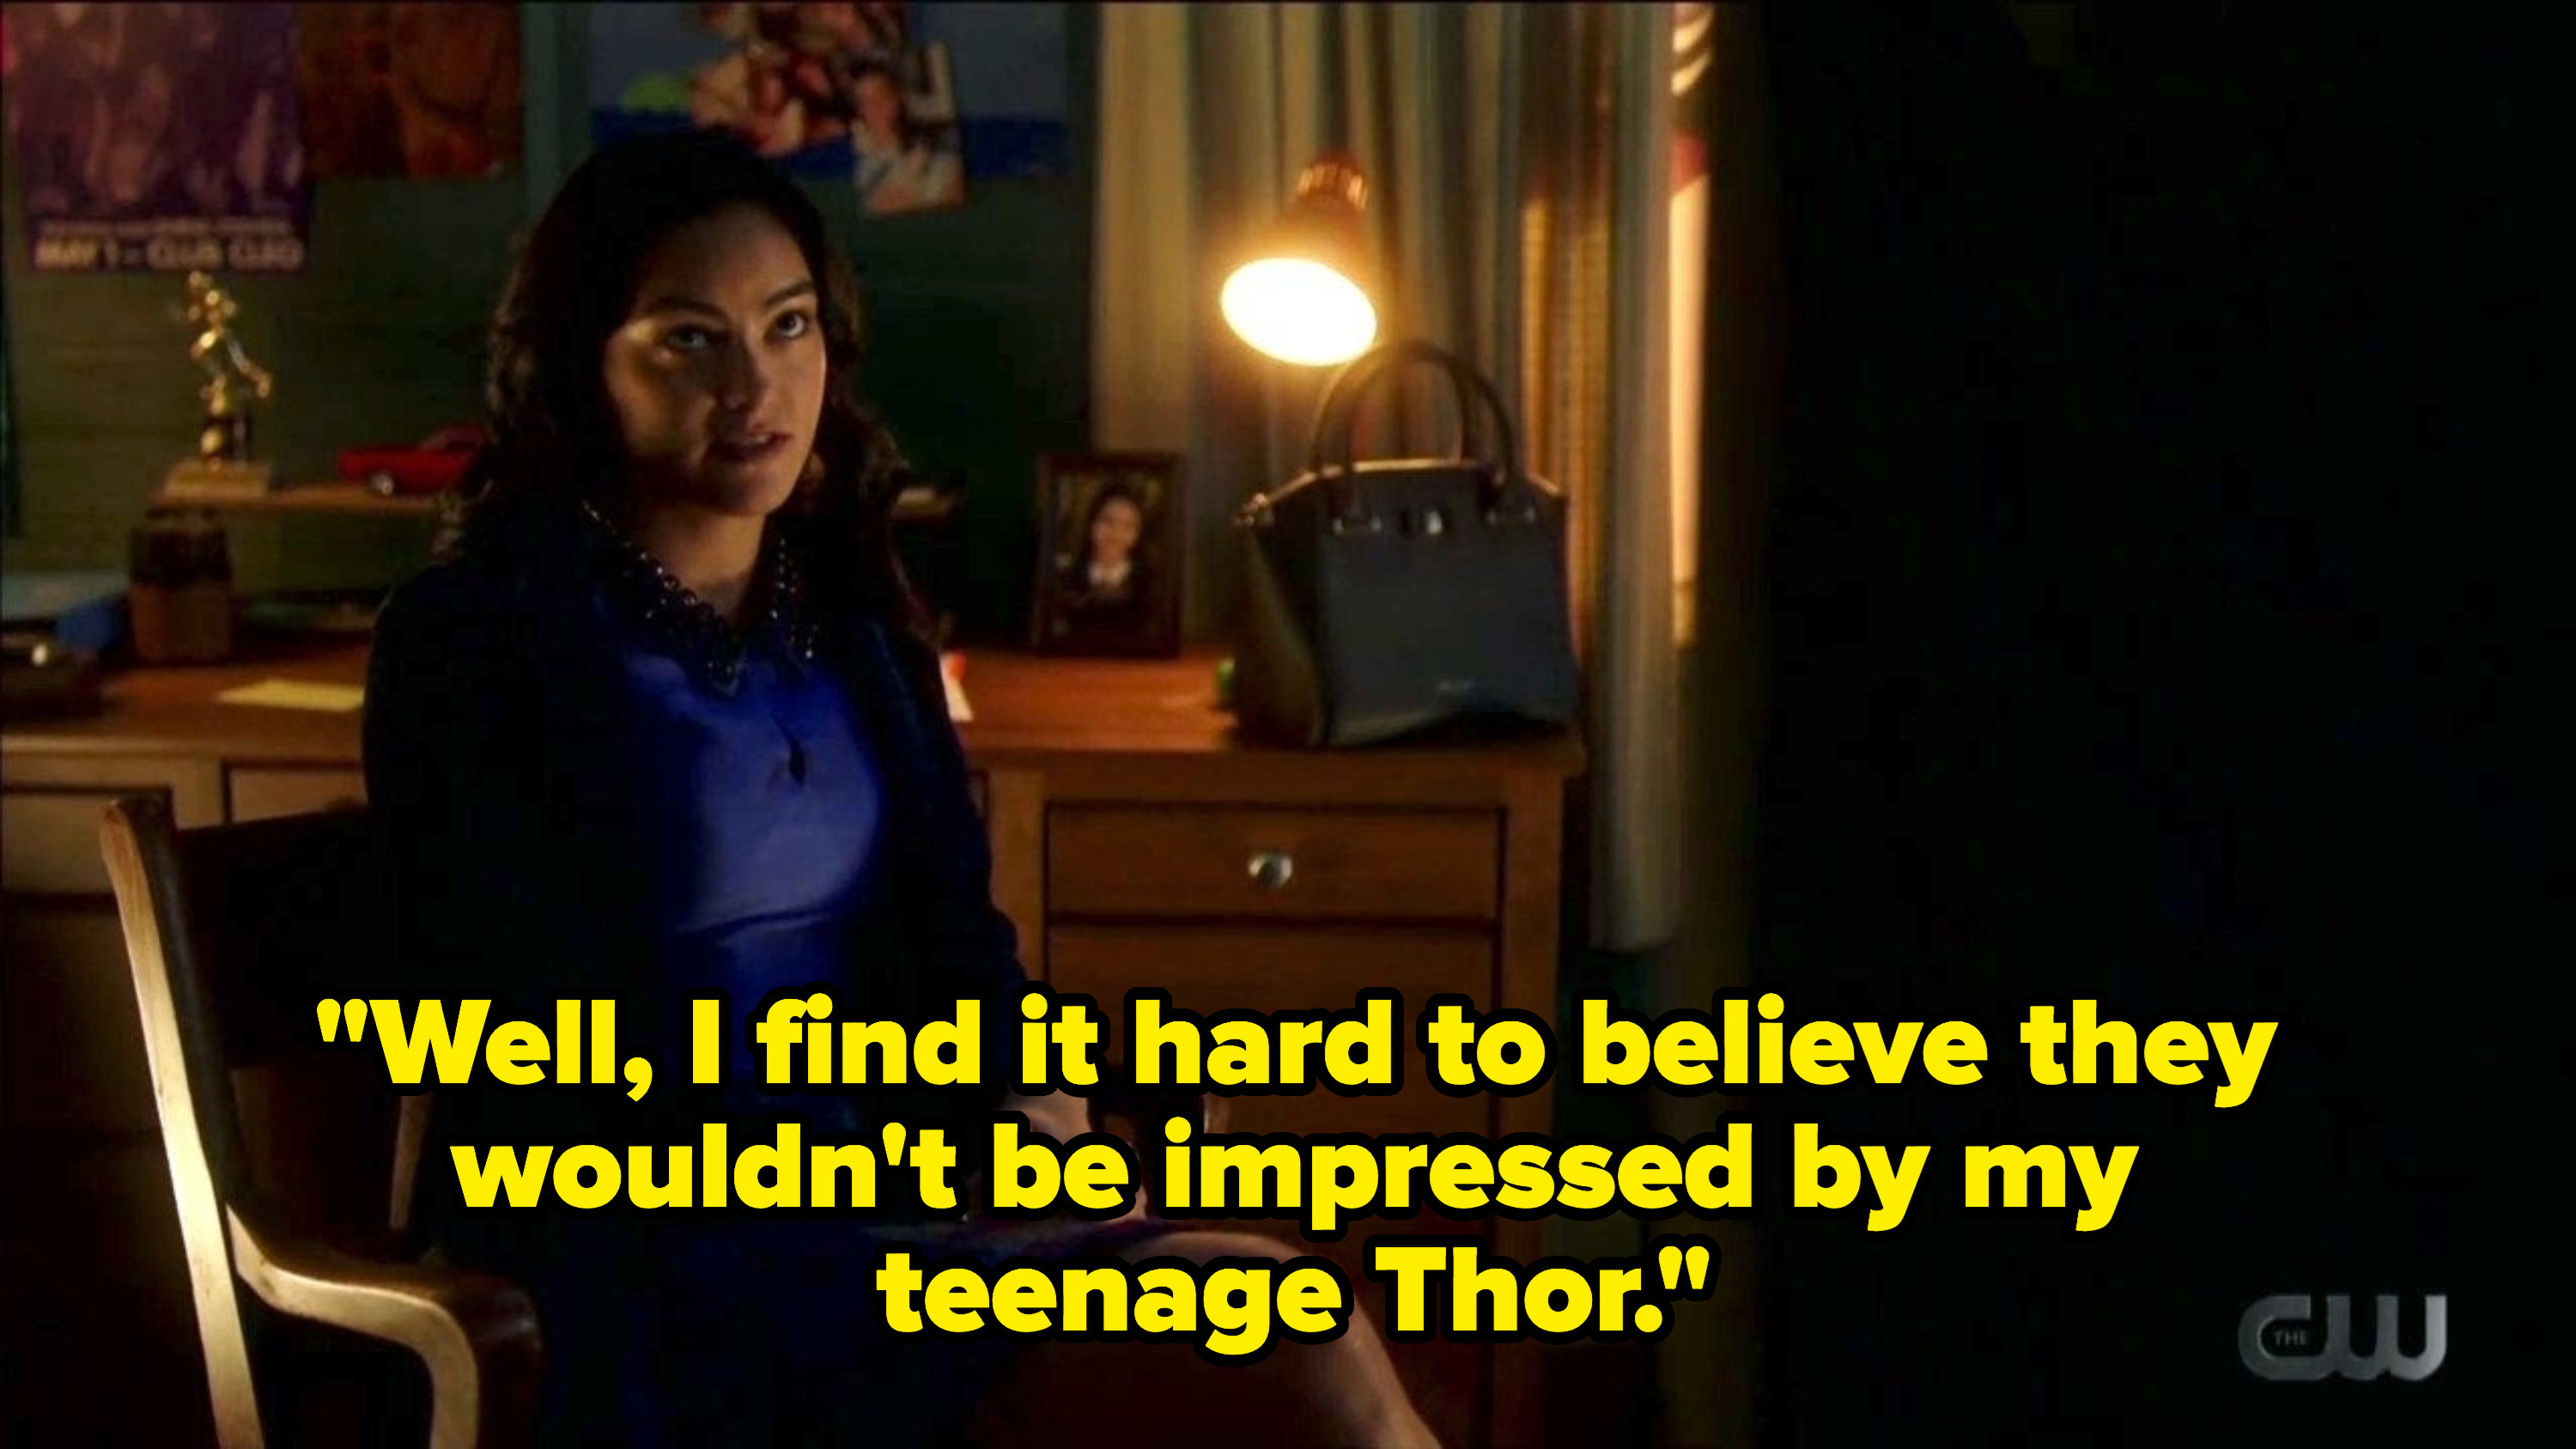 Veronica calls archie teenage Thor